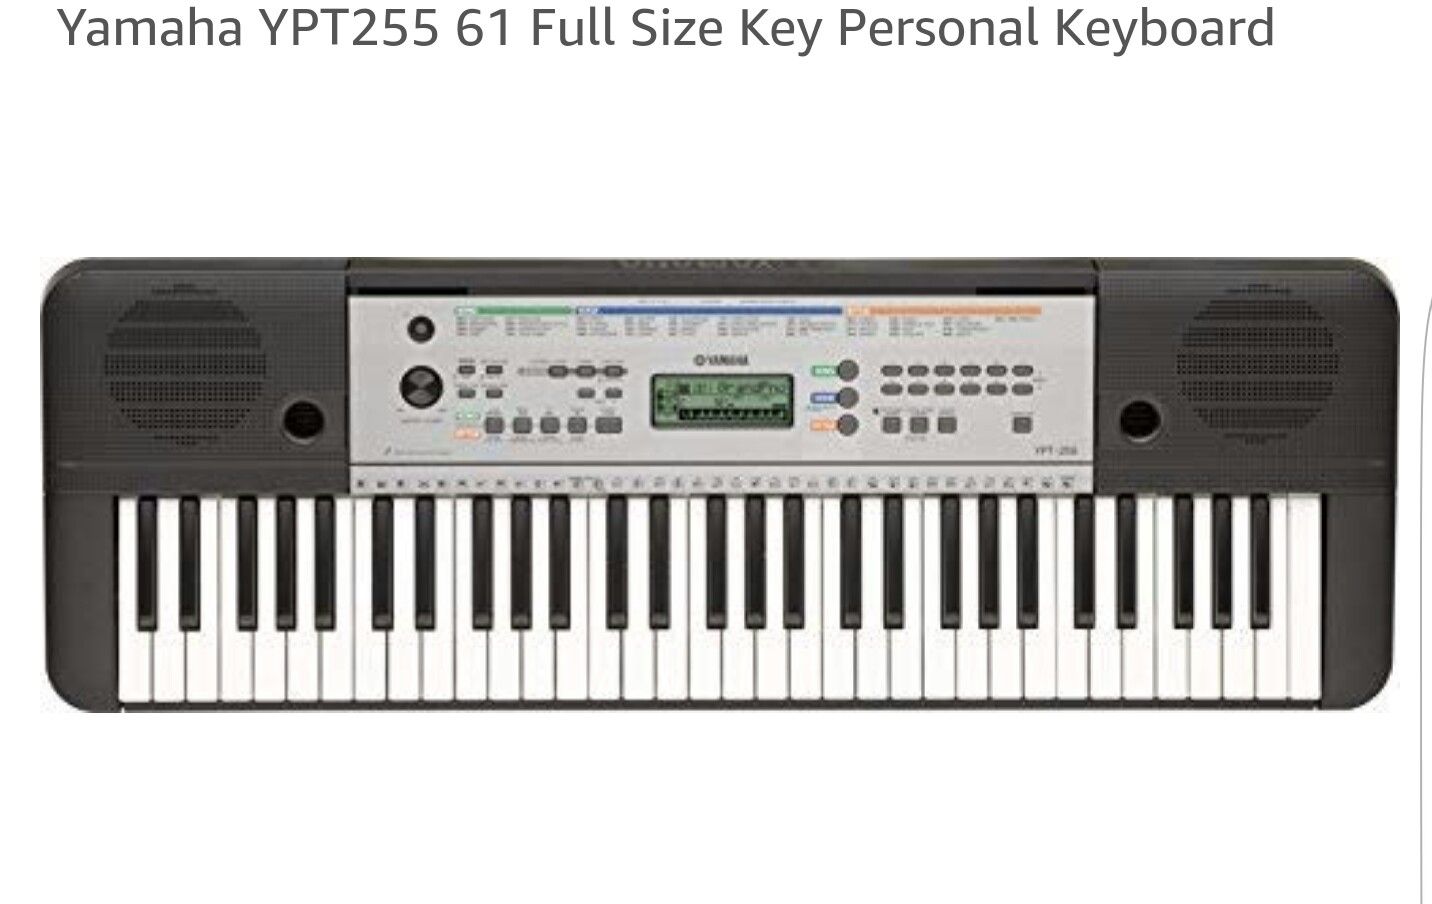 Yamaha YPT255 61 Full Size Key Personal Keyboard